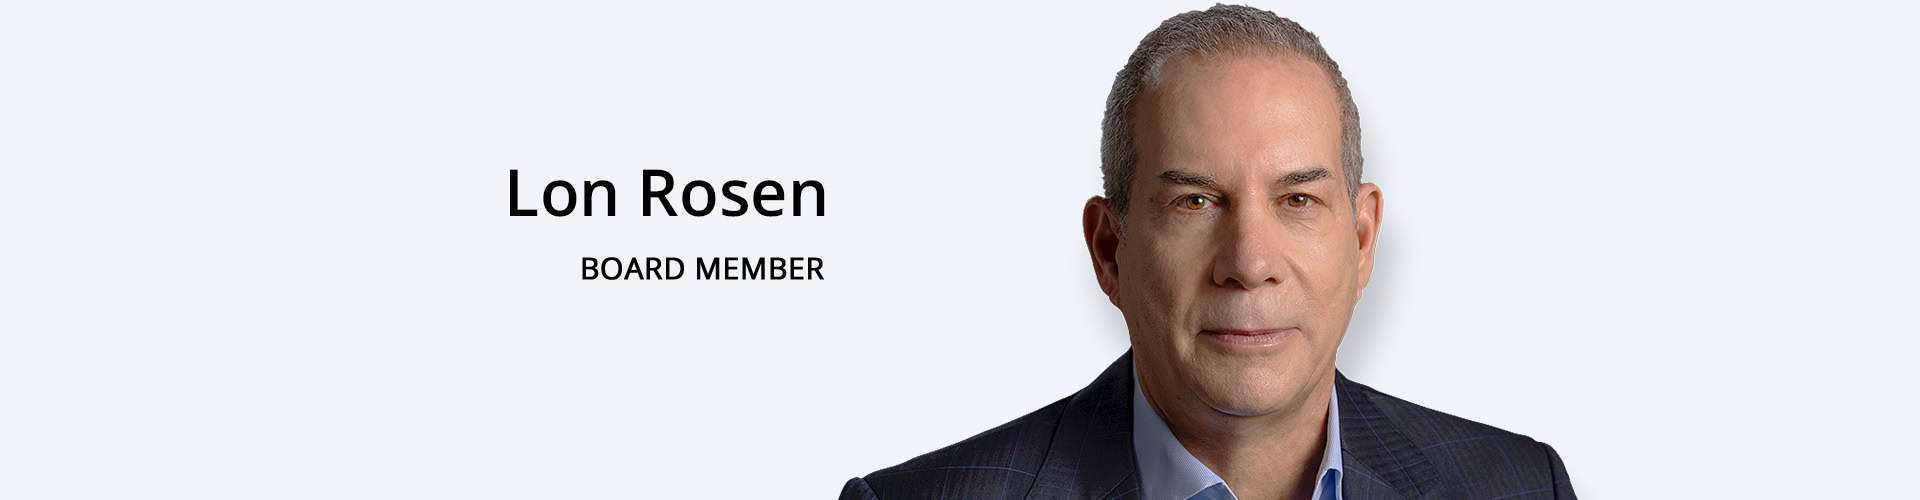 Lon Rosen-Board Member